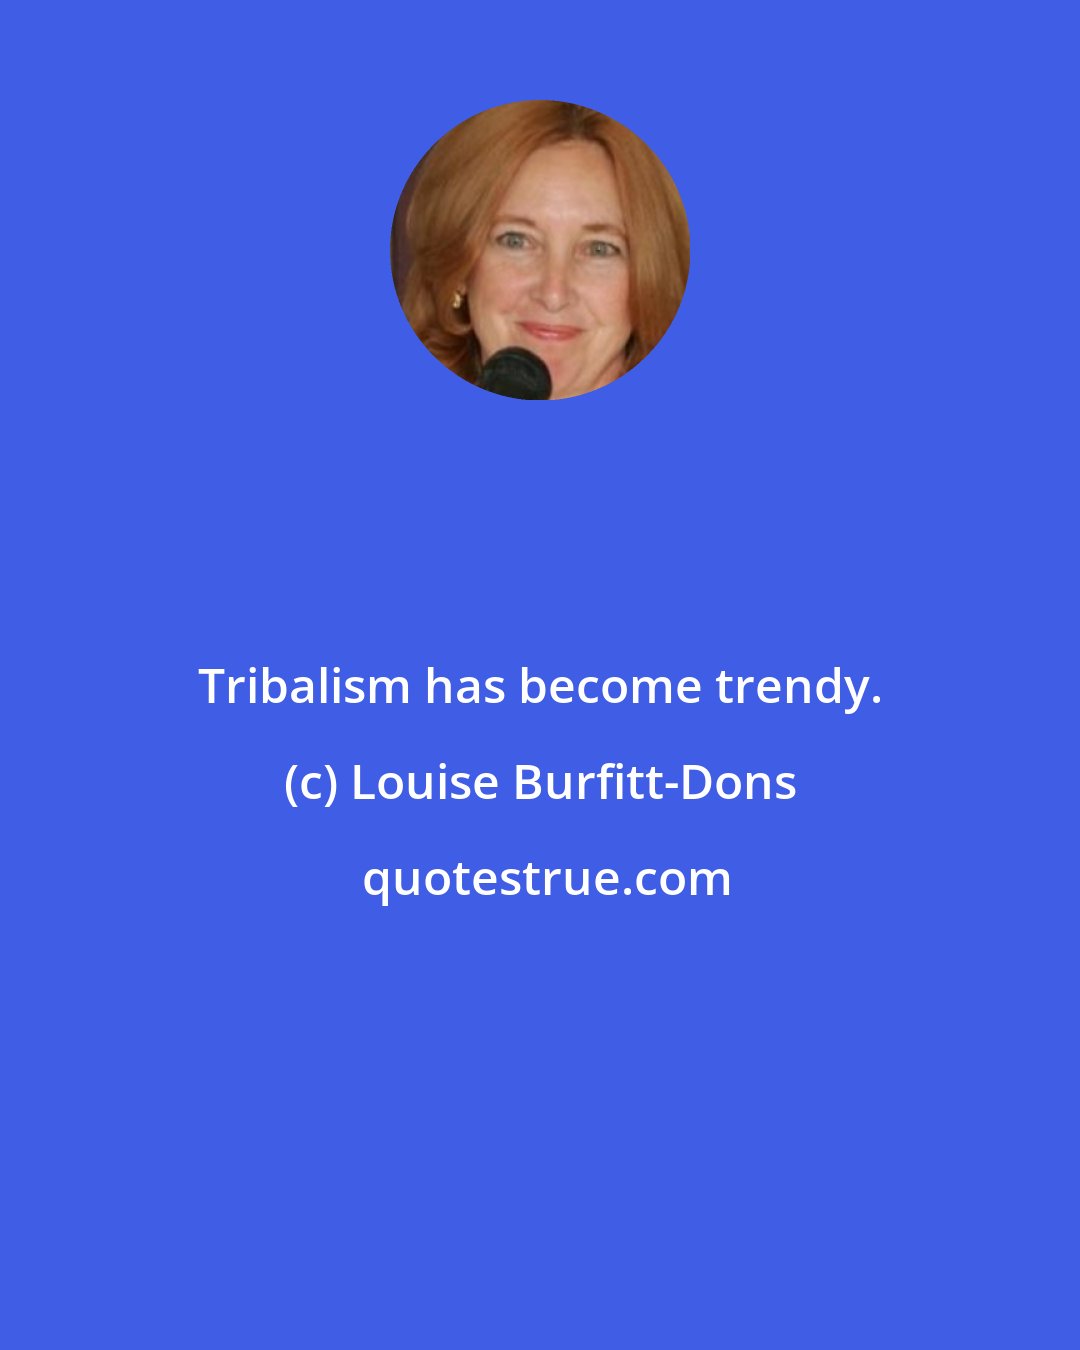 Louise Burfitt-Dons: Tribalism has become trendy.